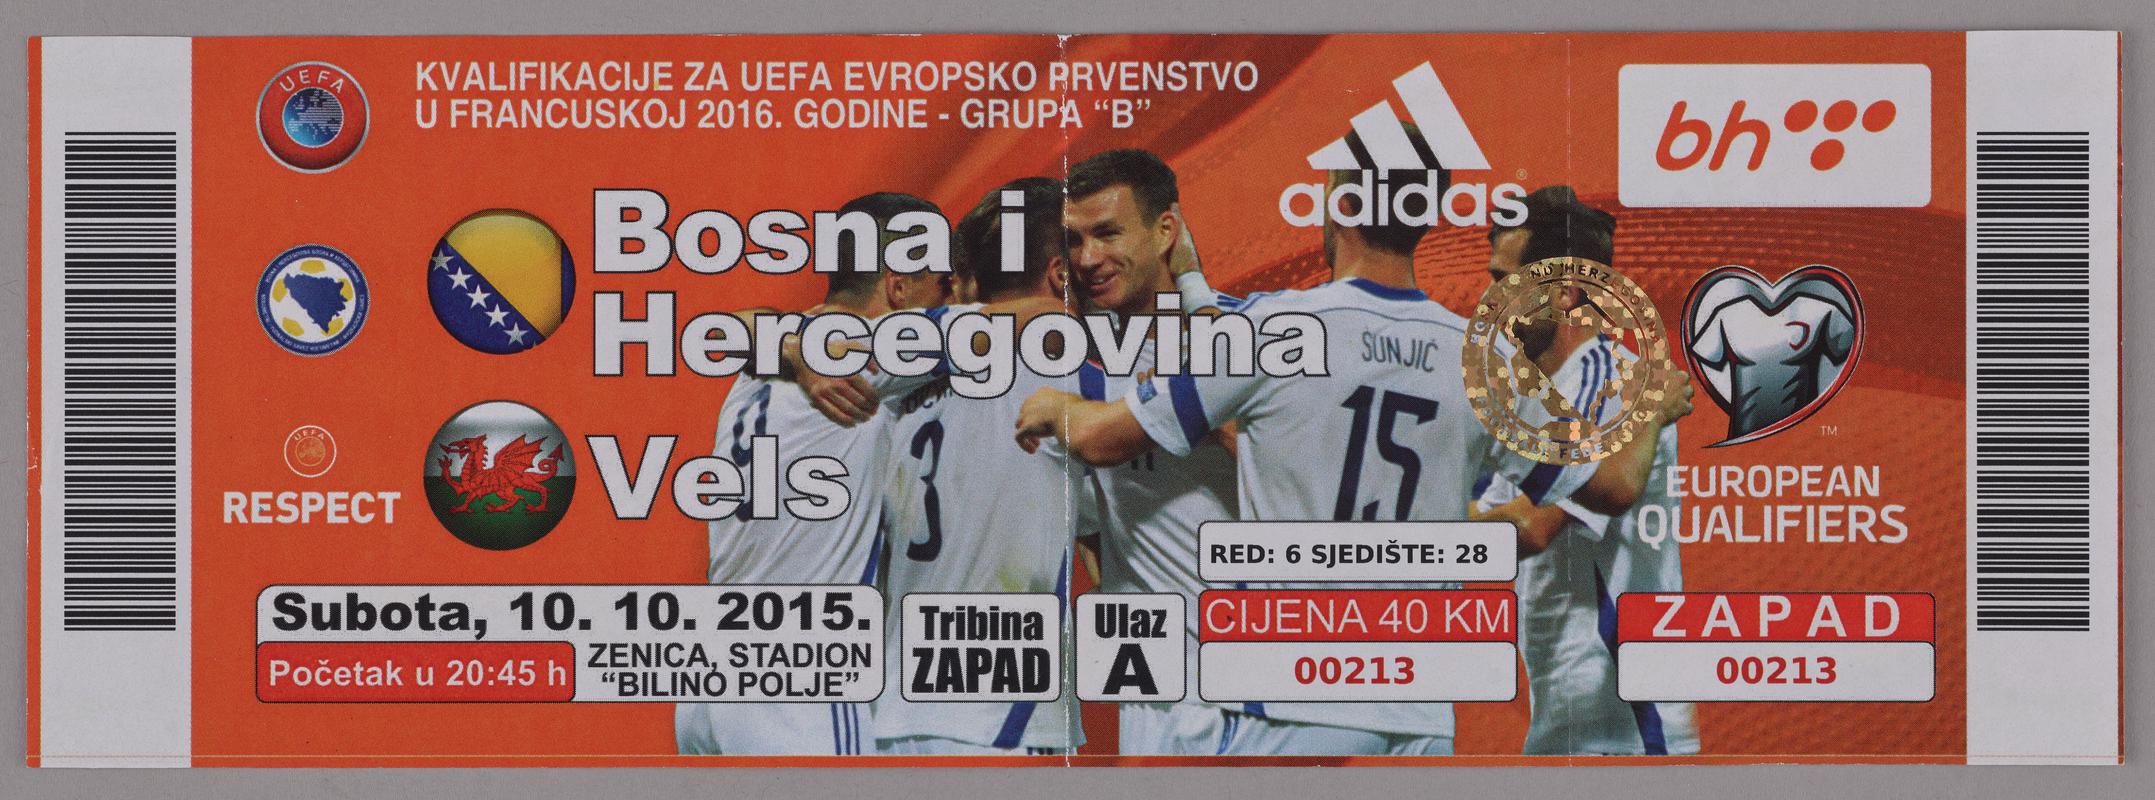 Football match ticket, Bosnia v Wales, 2015